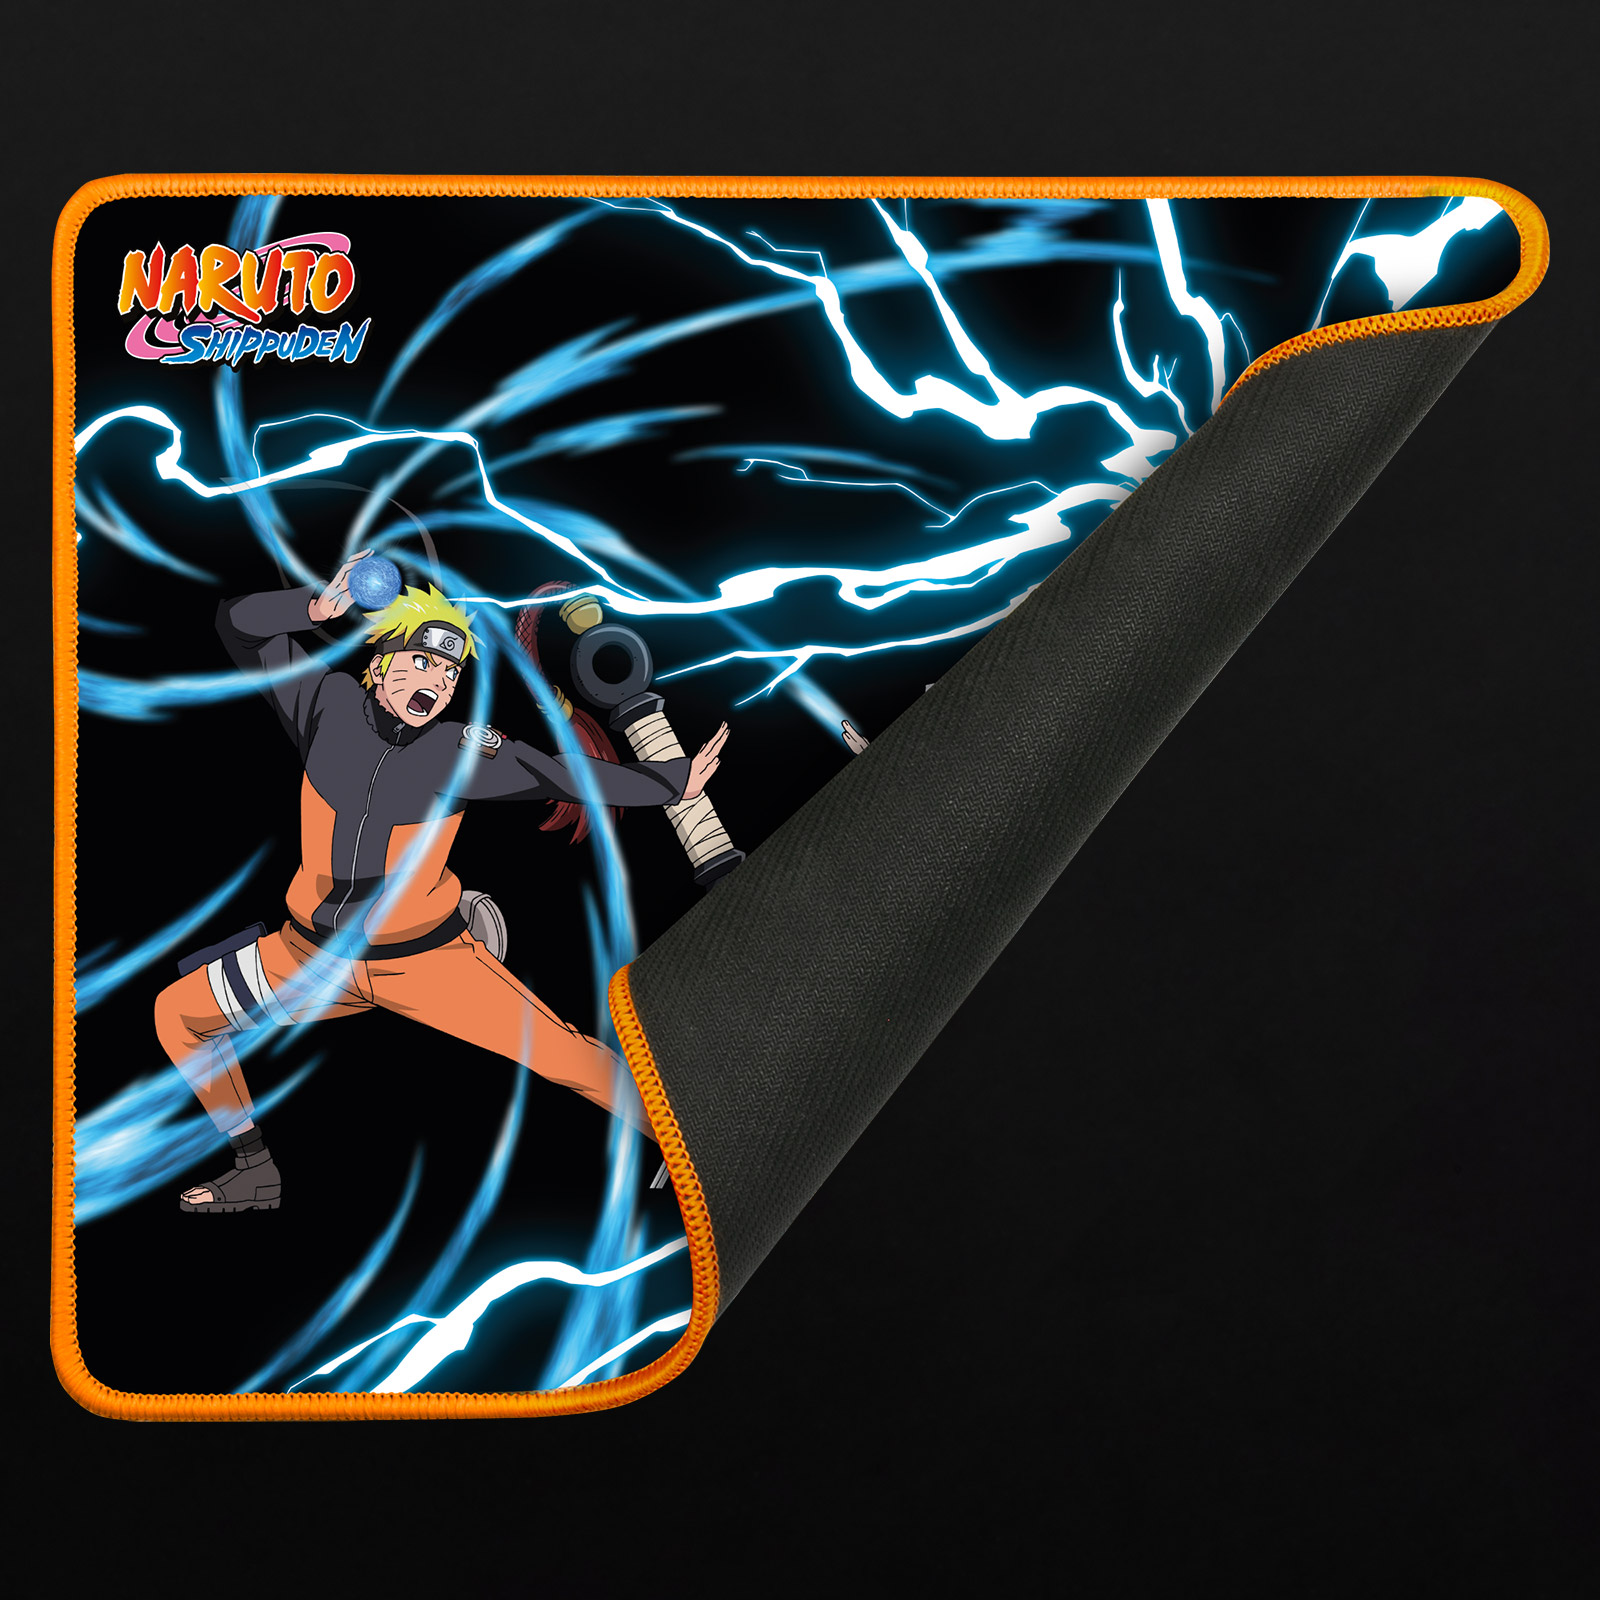 Tapis de souris combat Naruto et Sasuke - Naruto - KONIX